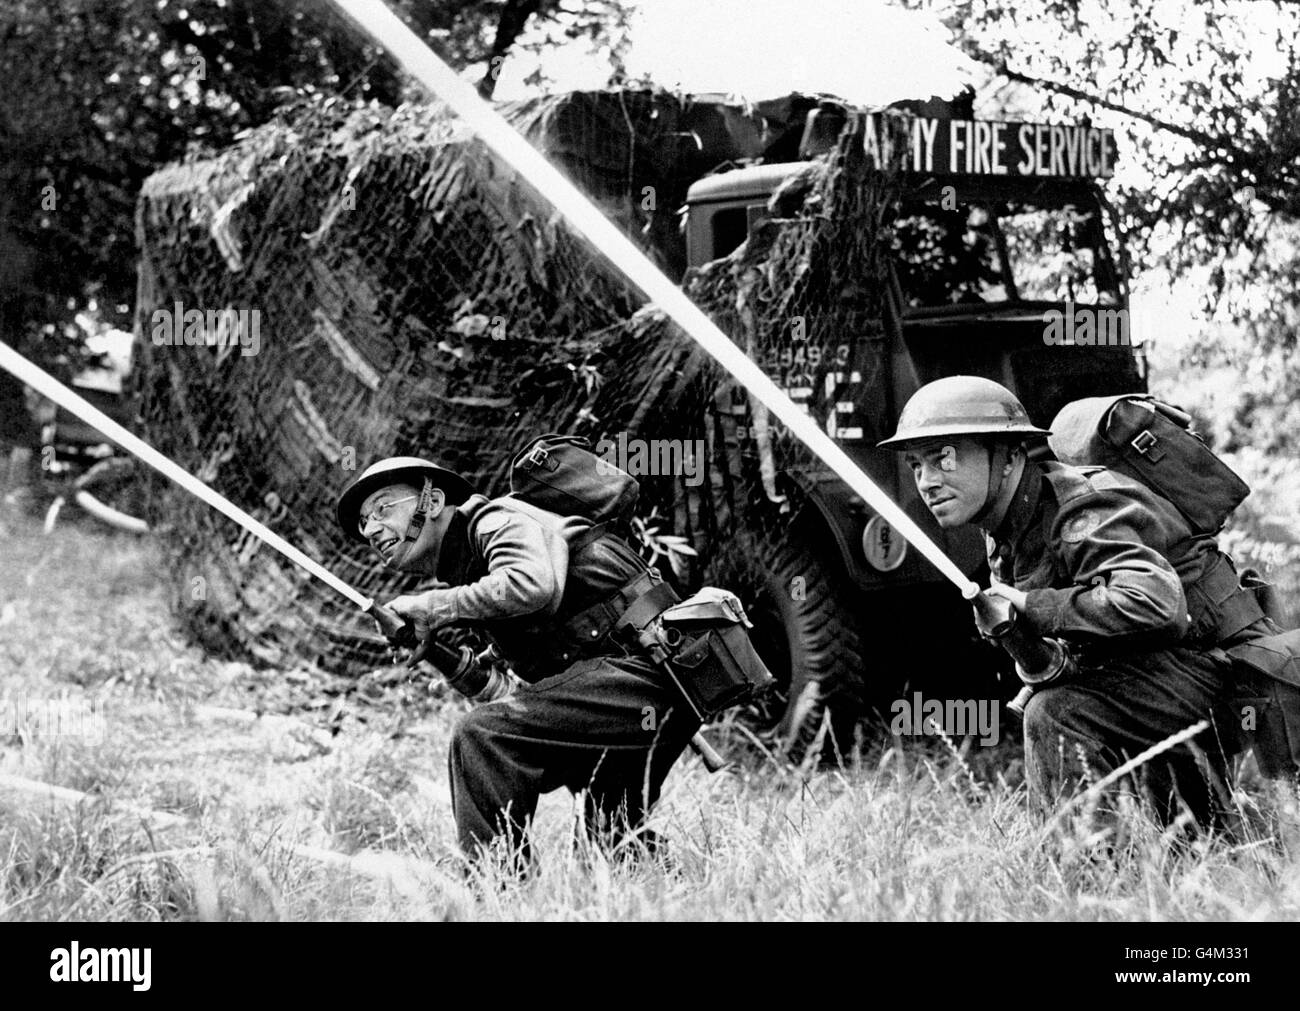 Second World War - British Empire - British Army - Army Fire Service - 1940 Stock Photo